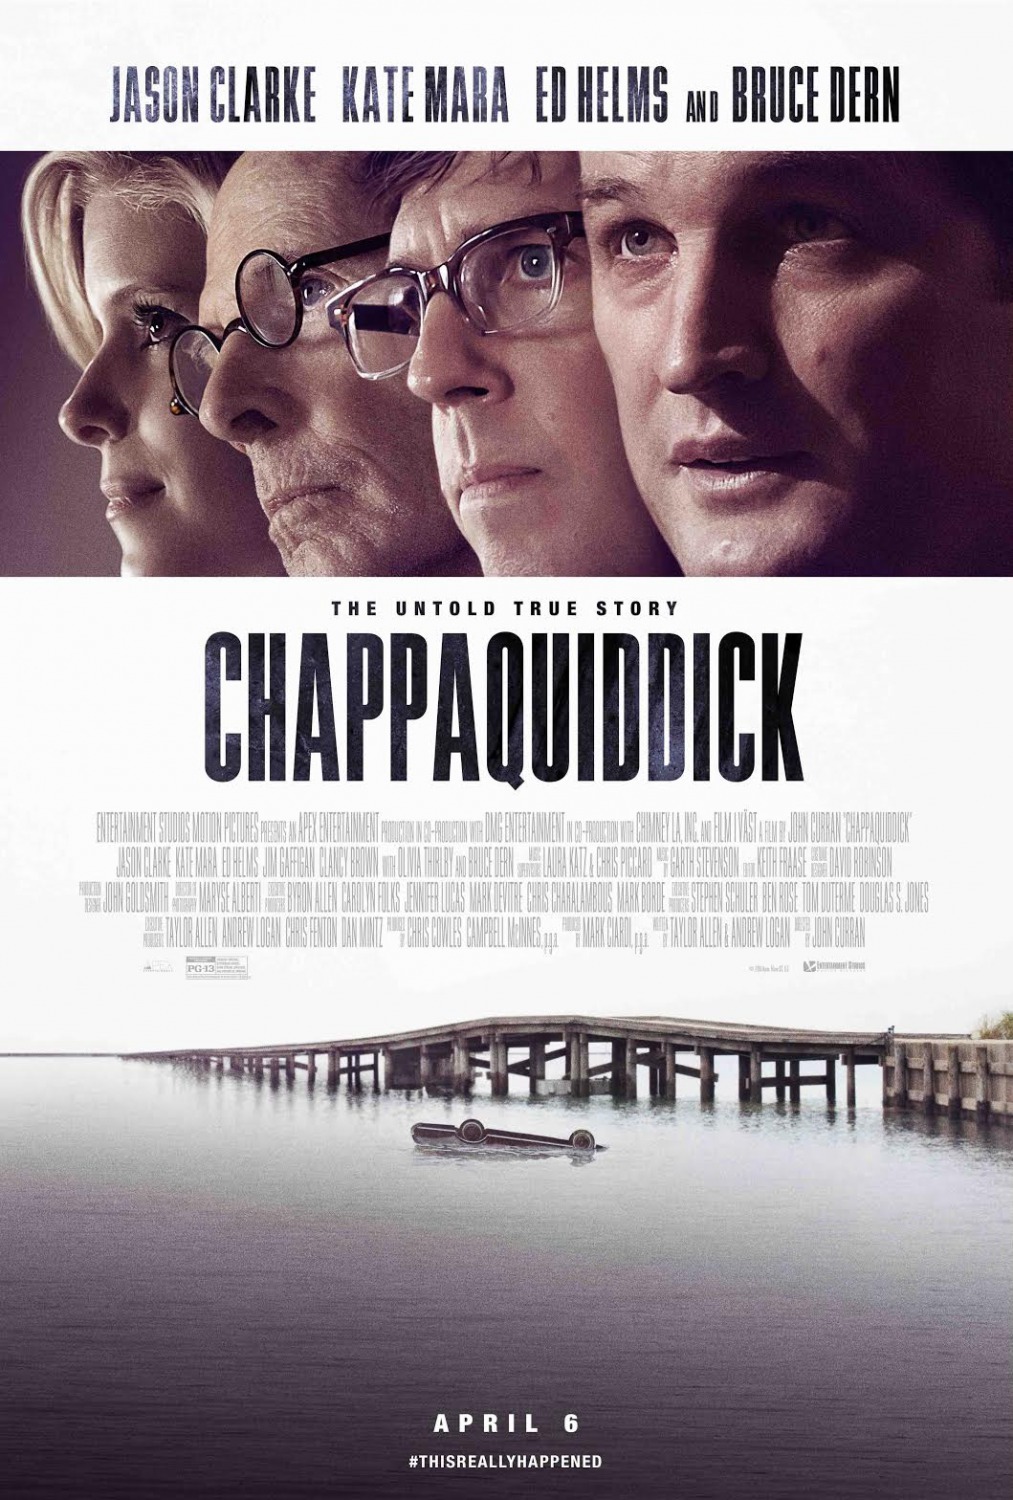 Nonton film Chappaquiddick layarkaca21 indoxx1 ganool online streaming terbaru